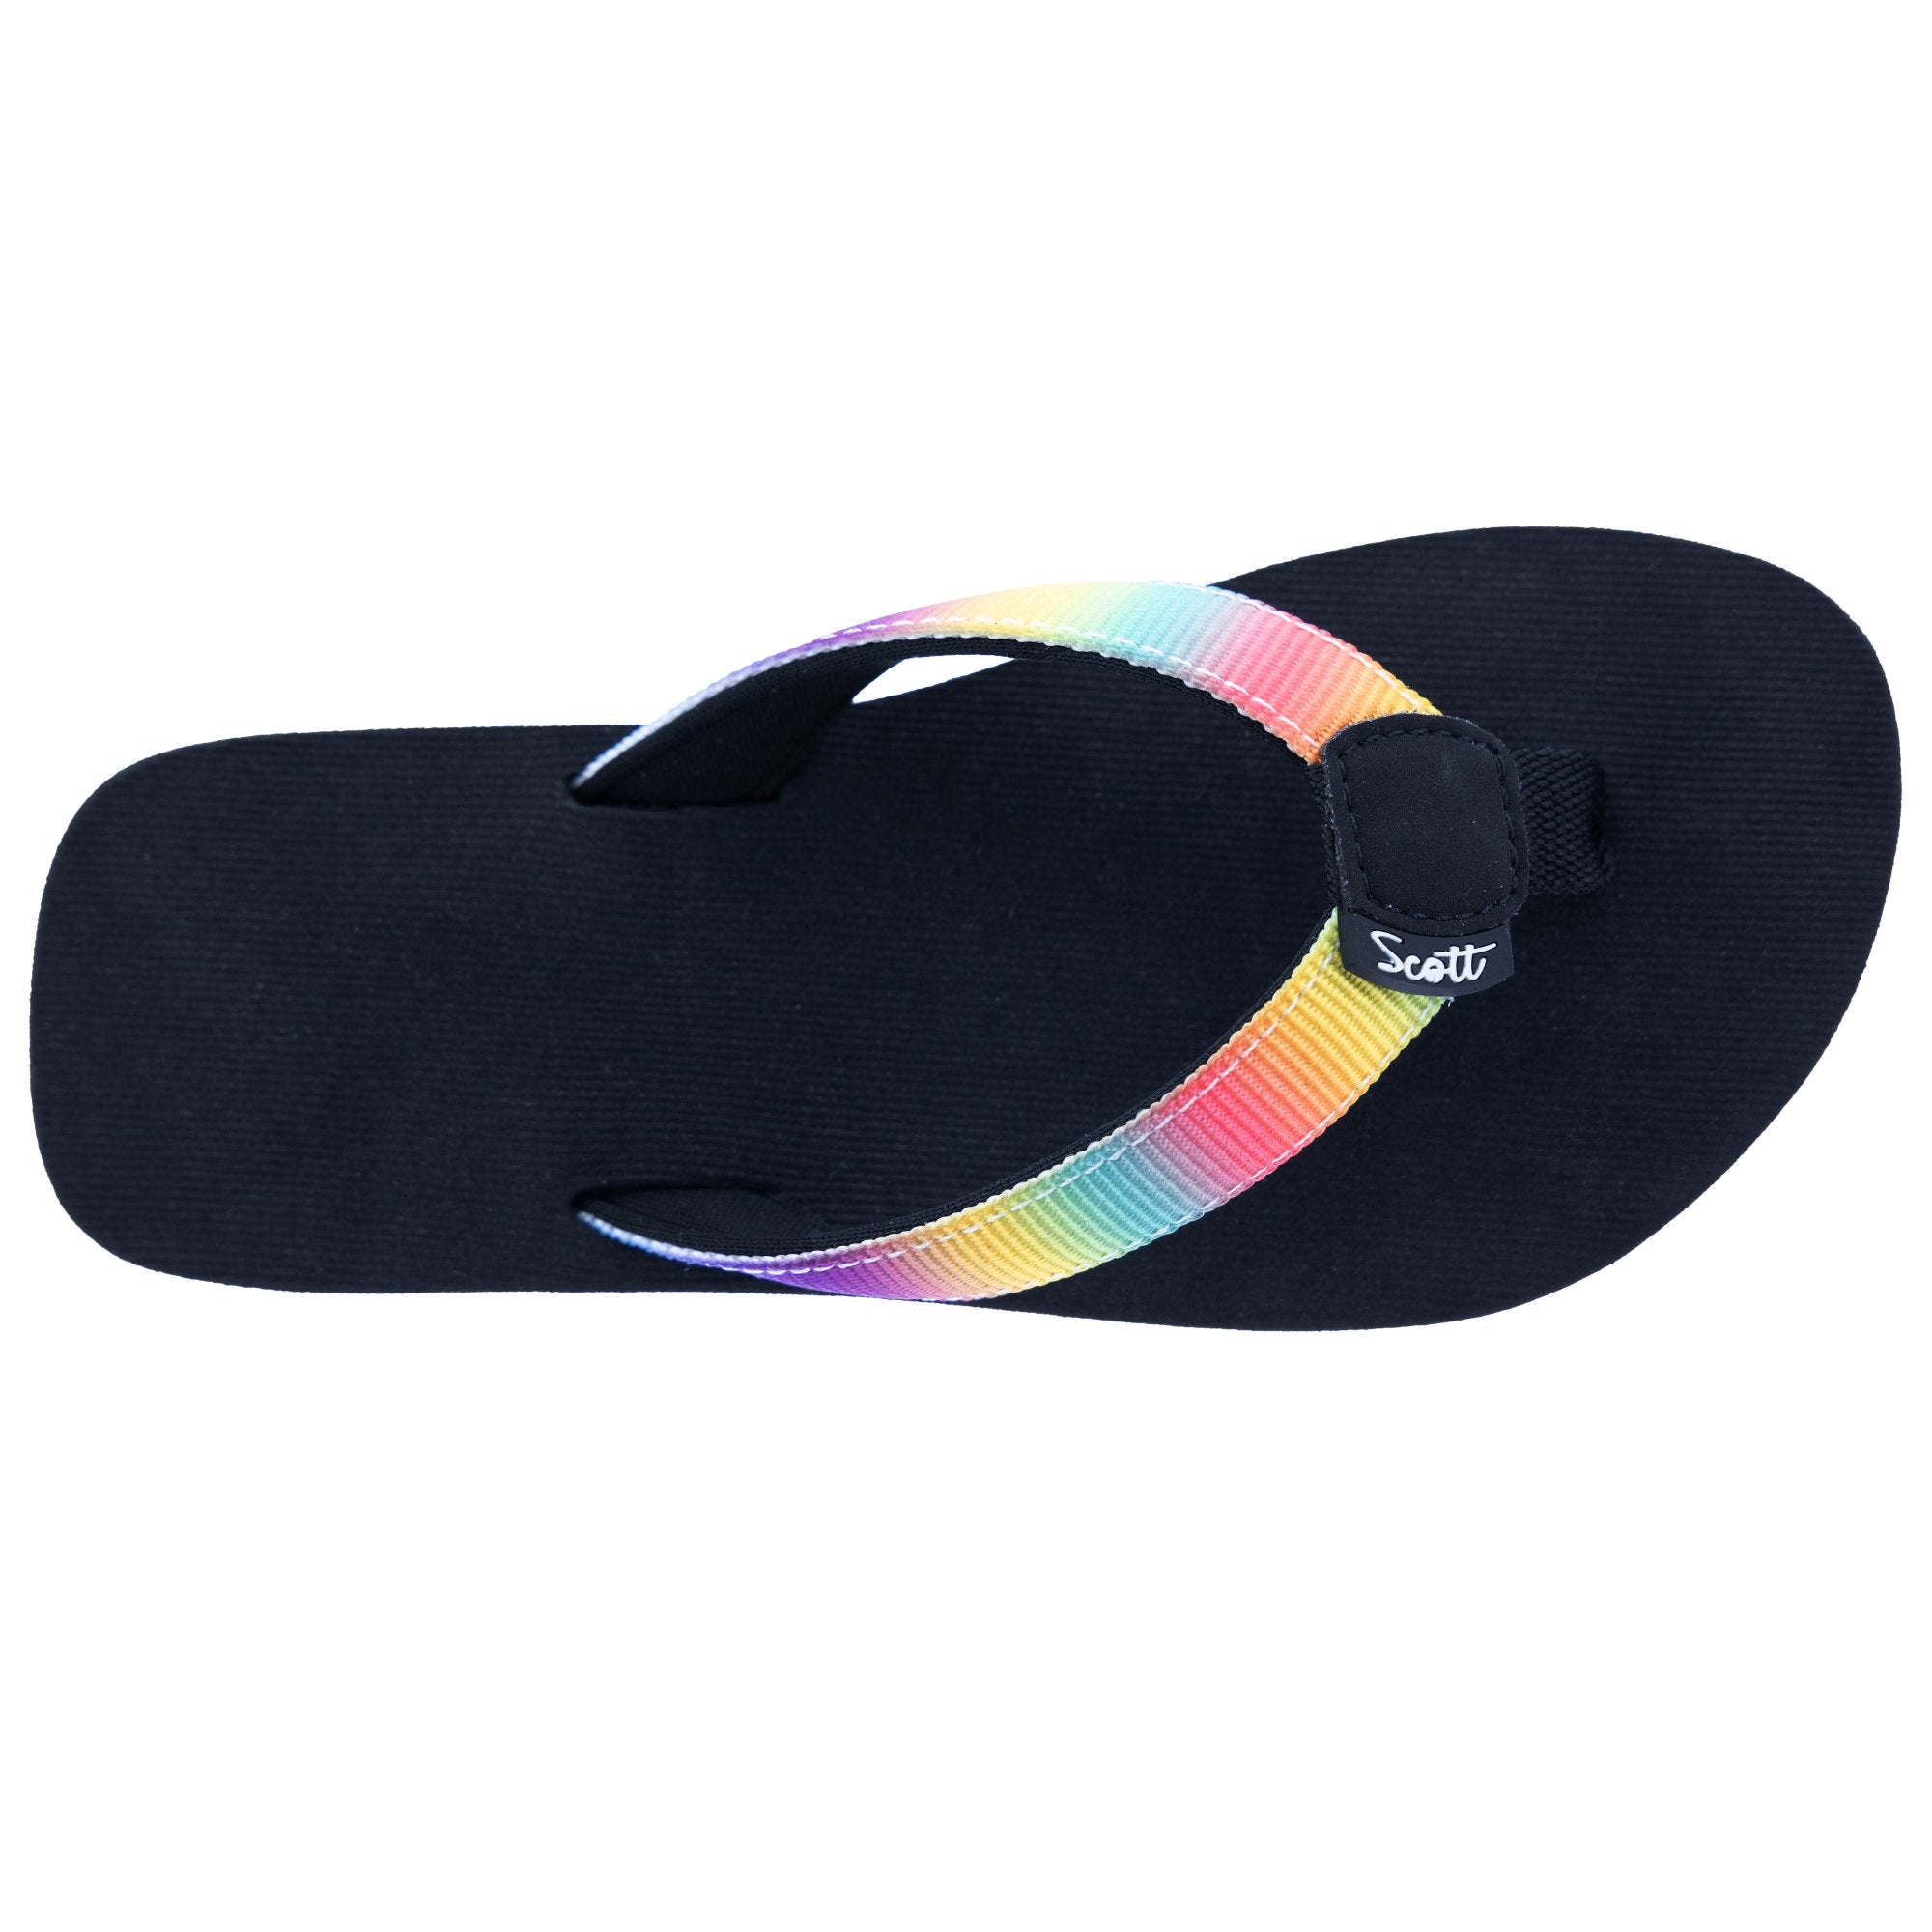 Scott Hawaii Girl's Kamalei Rainbow Flip-flops